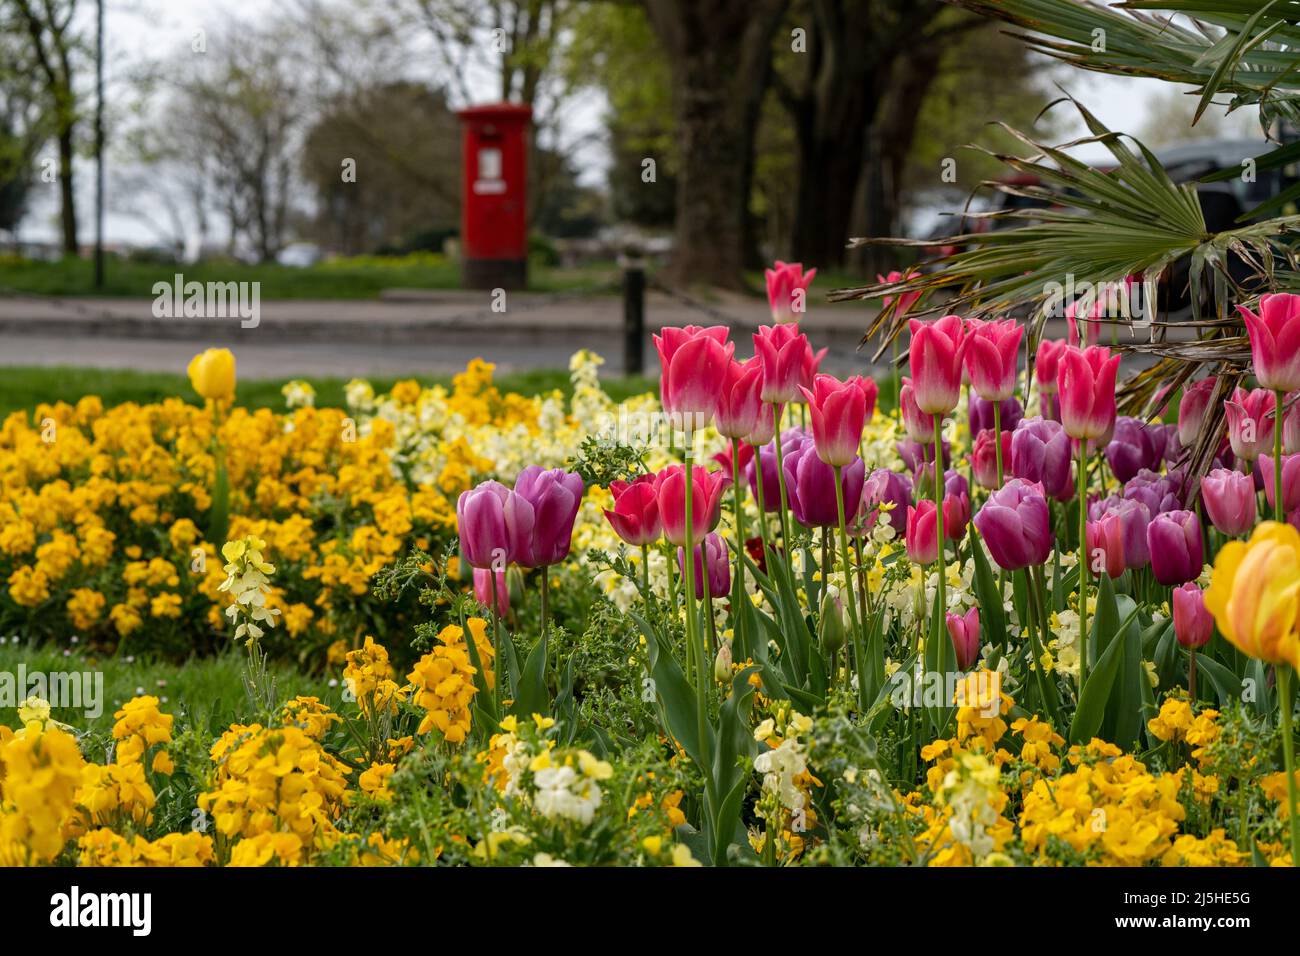 Palmeria Square, Hove, East Sussex - Spring Tulips-Tulipa. Stock Photo